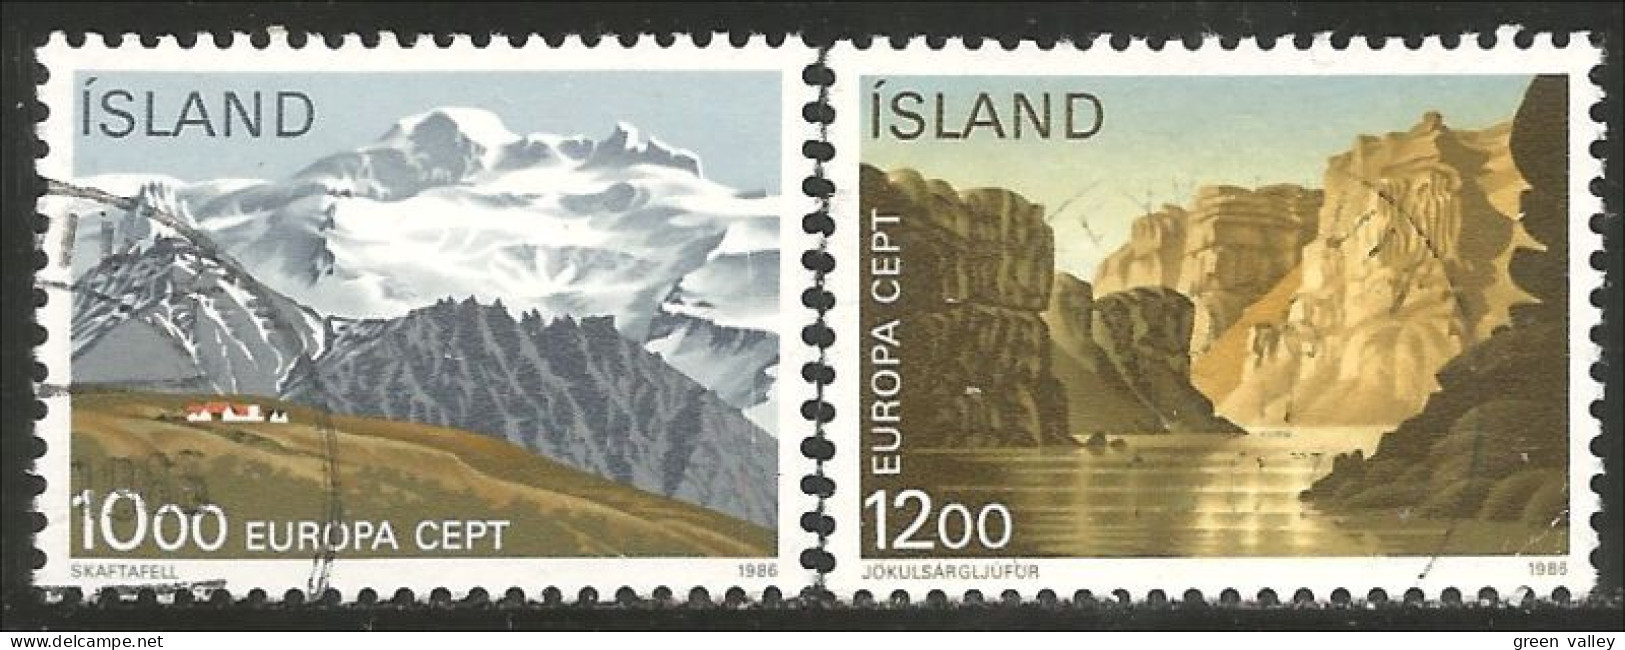 EU86-48d EUROPA CEPT 1986 Iceland Paysages Landscapes - 1986